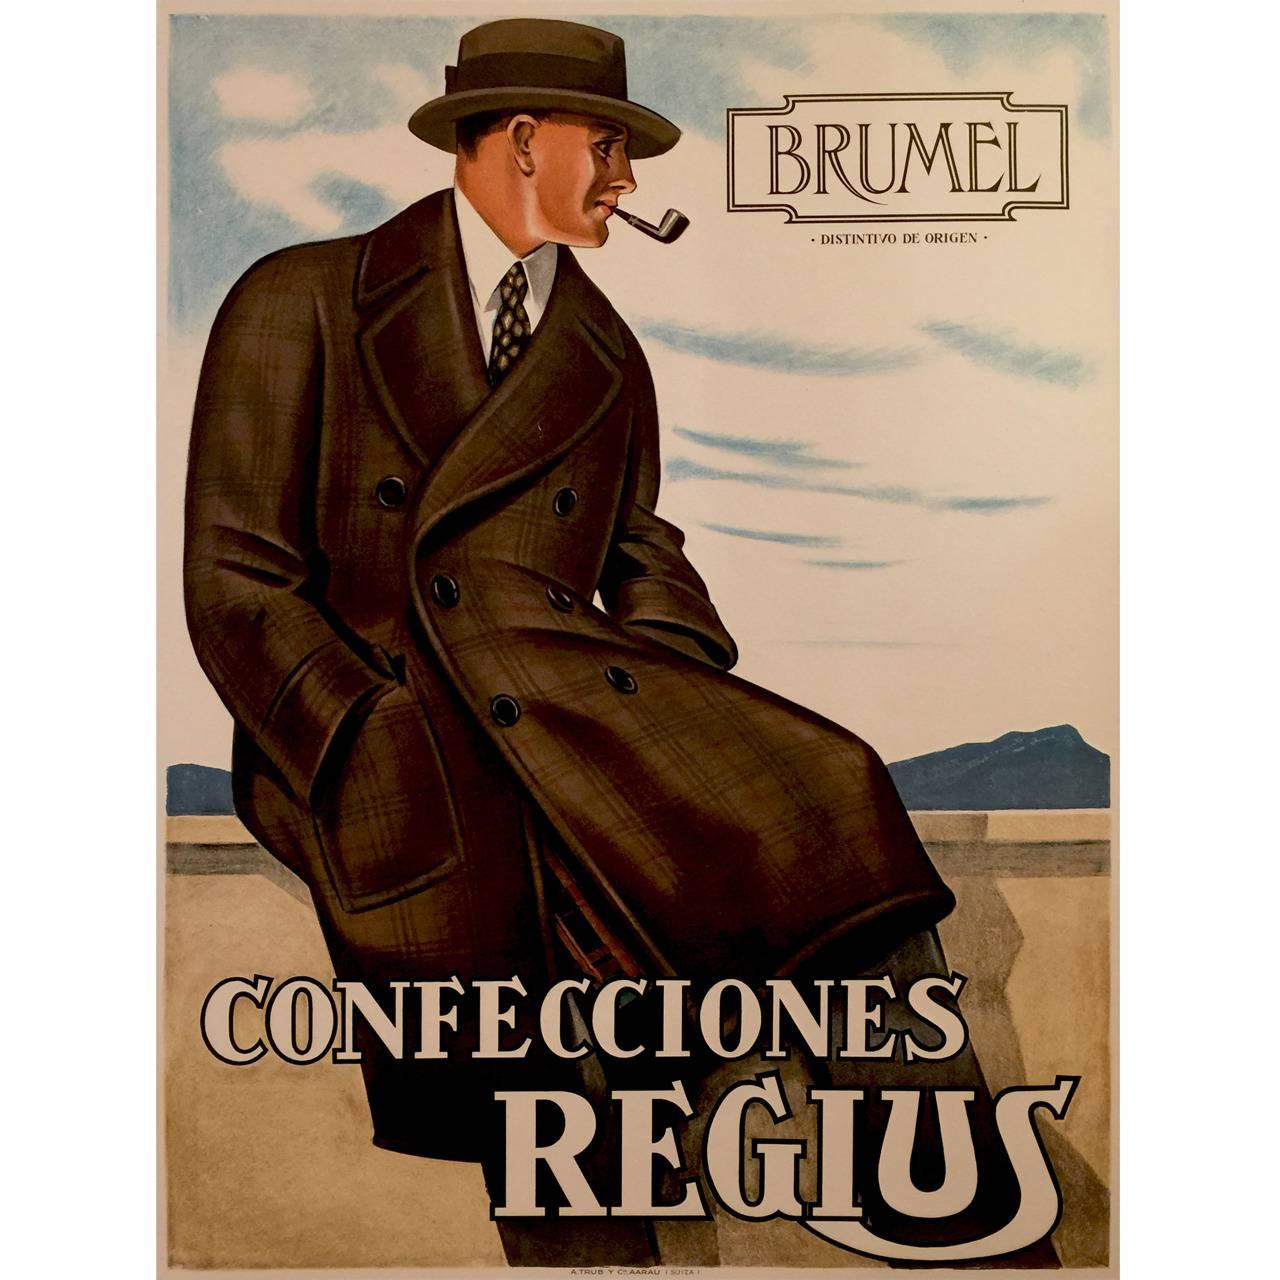 Swiss Art Deco Period Advertising Poster for Regius Men's Clothing, 1927 For Sale